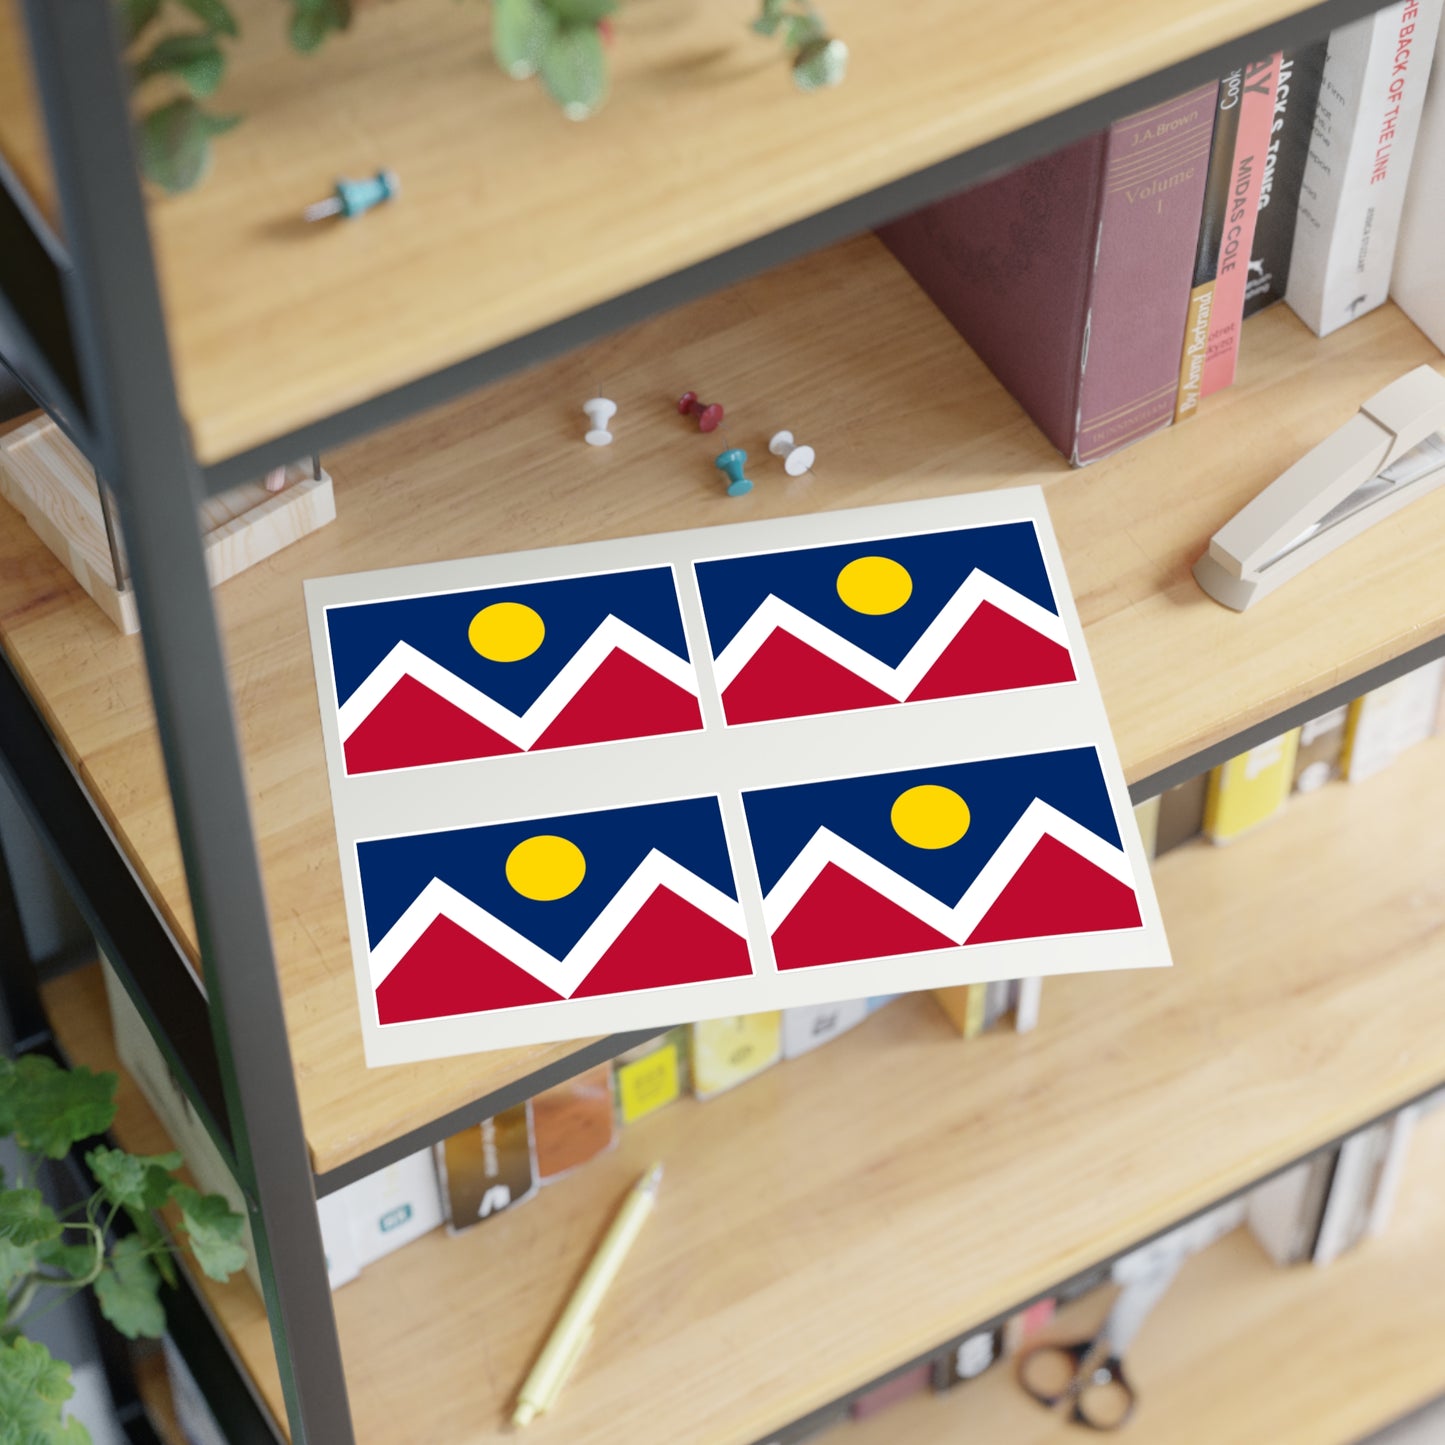 Denver Flag, Sticker Sheets